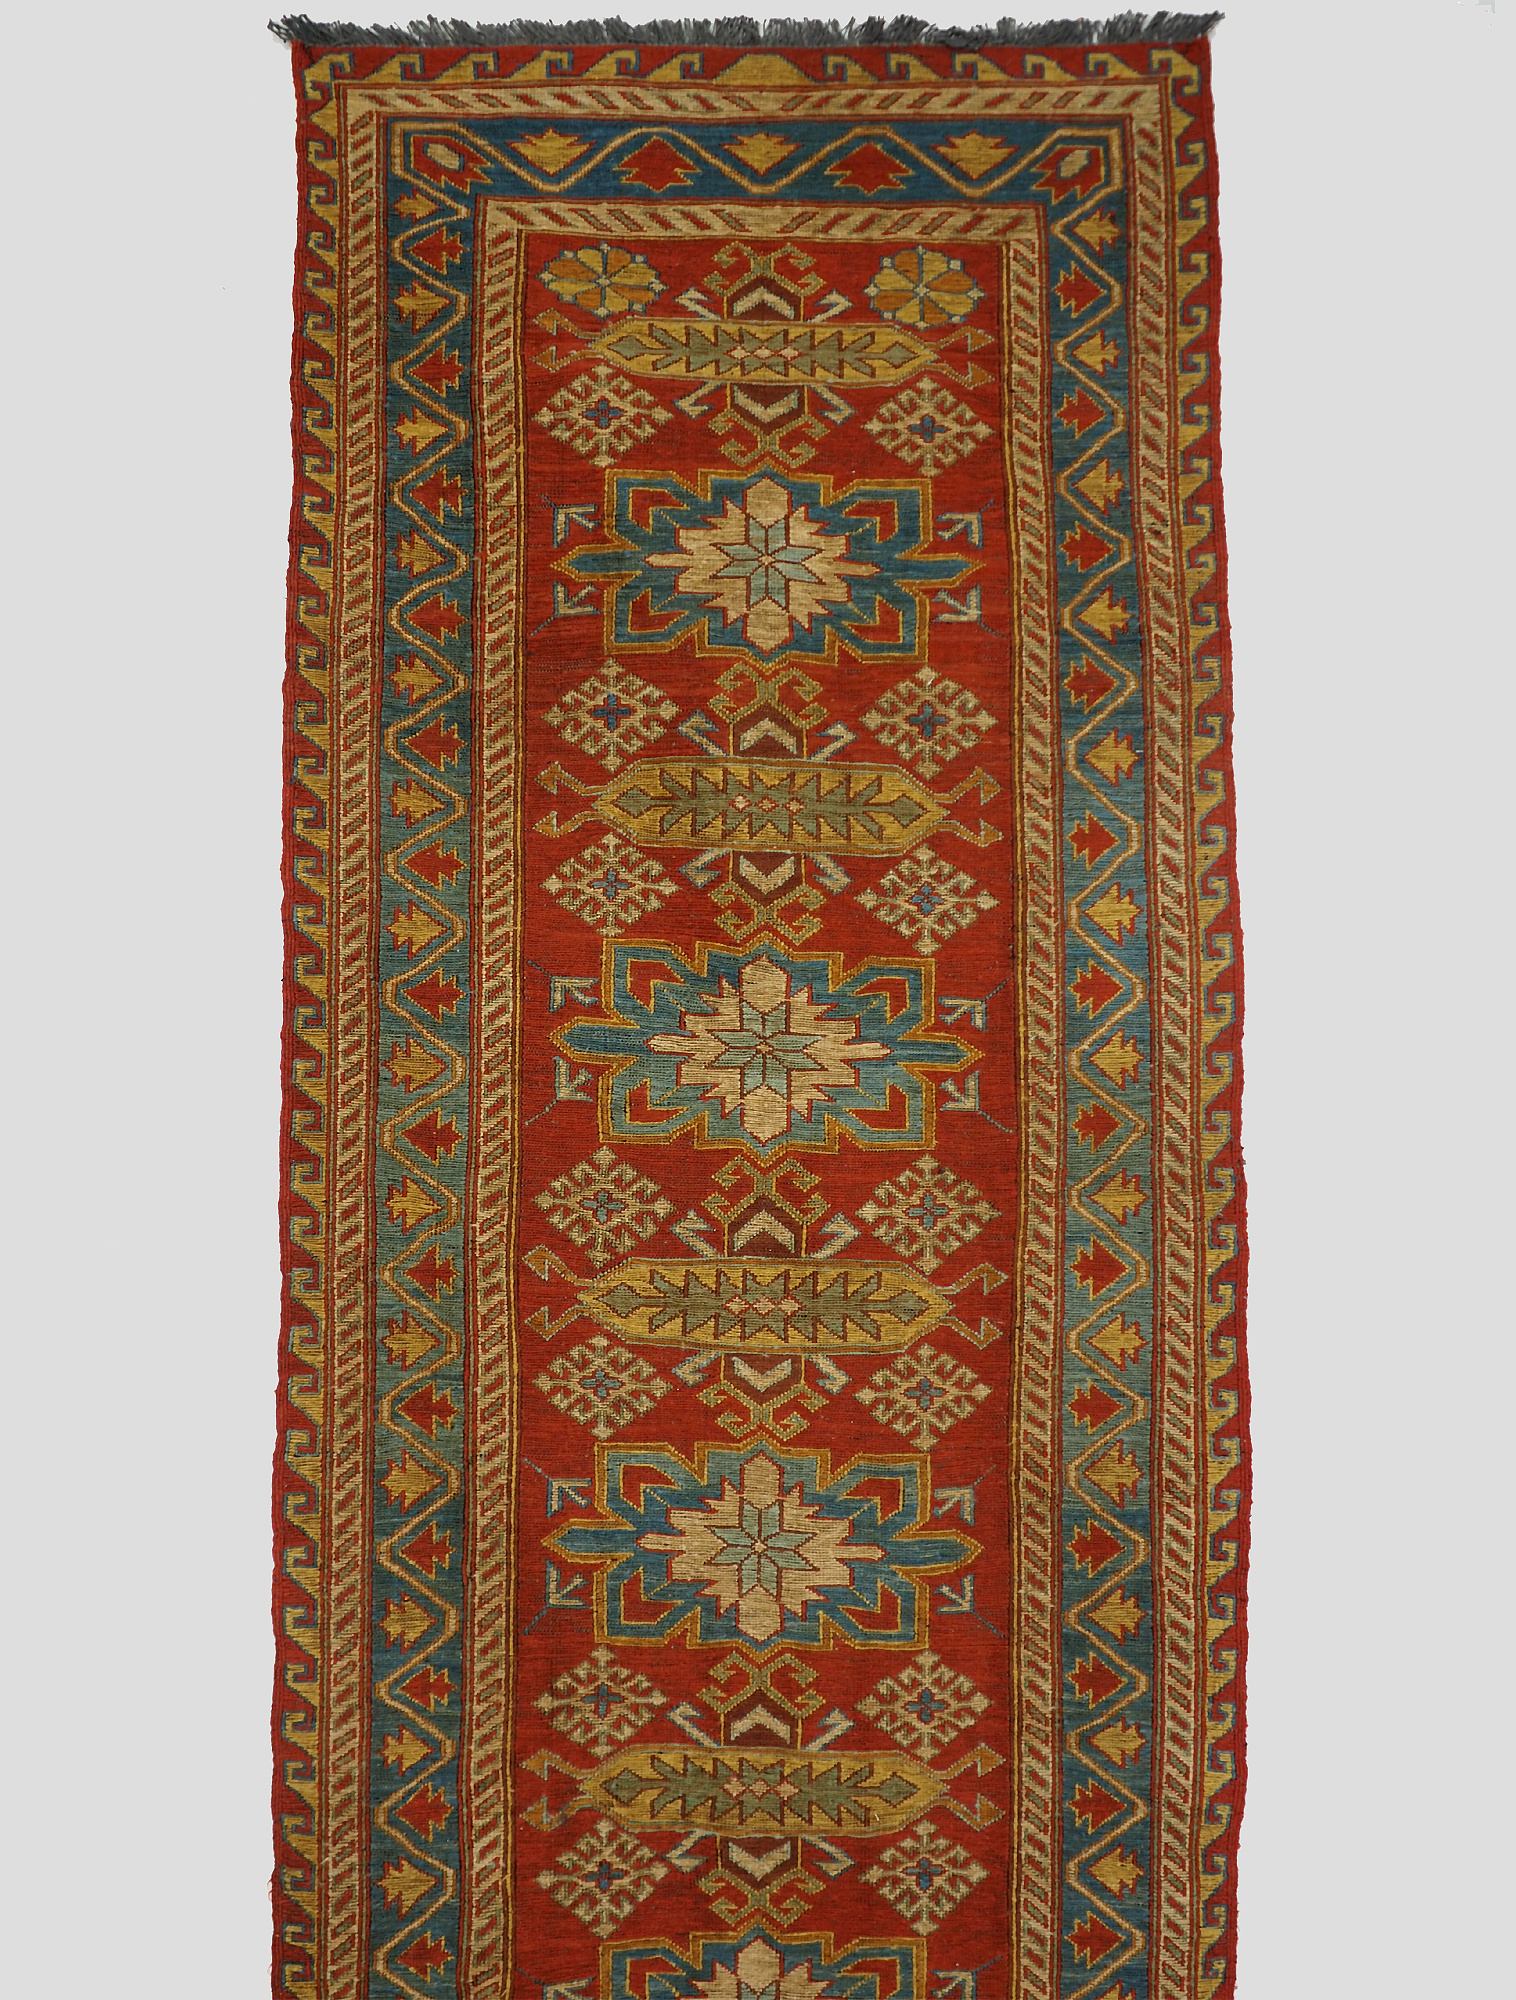 350x80 cm  (11,4 x 2,6 ft )  tribal Nomadic Caucasian Soumak sumakh  Vintage Kilim rug  runner carpet stair carpet corridor Hallway No-WL/P